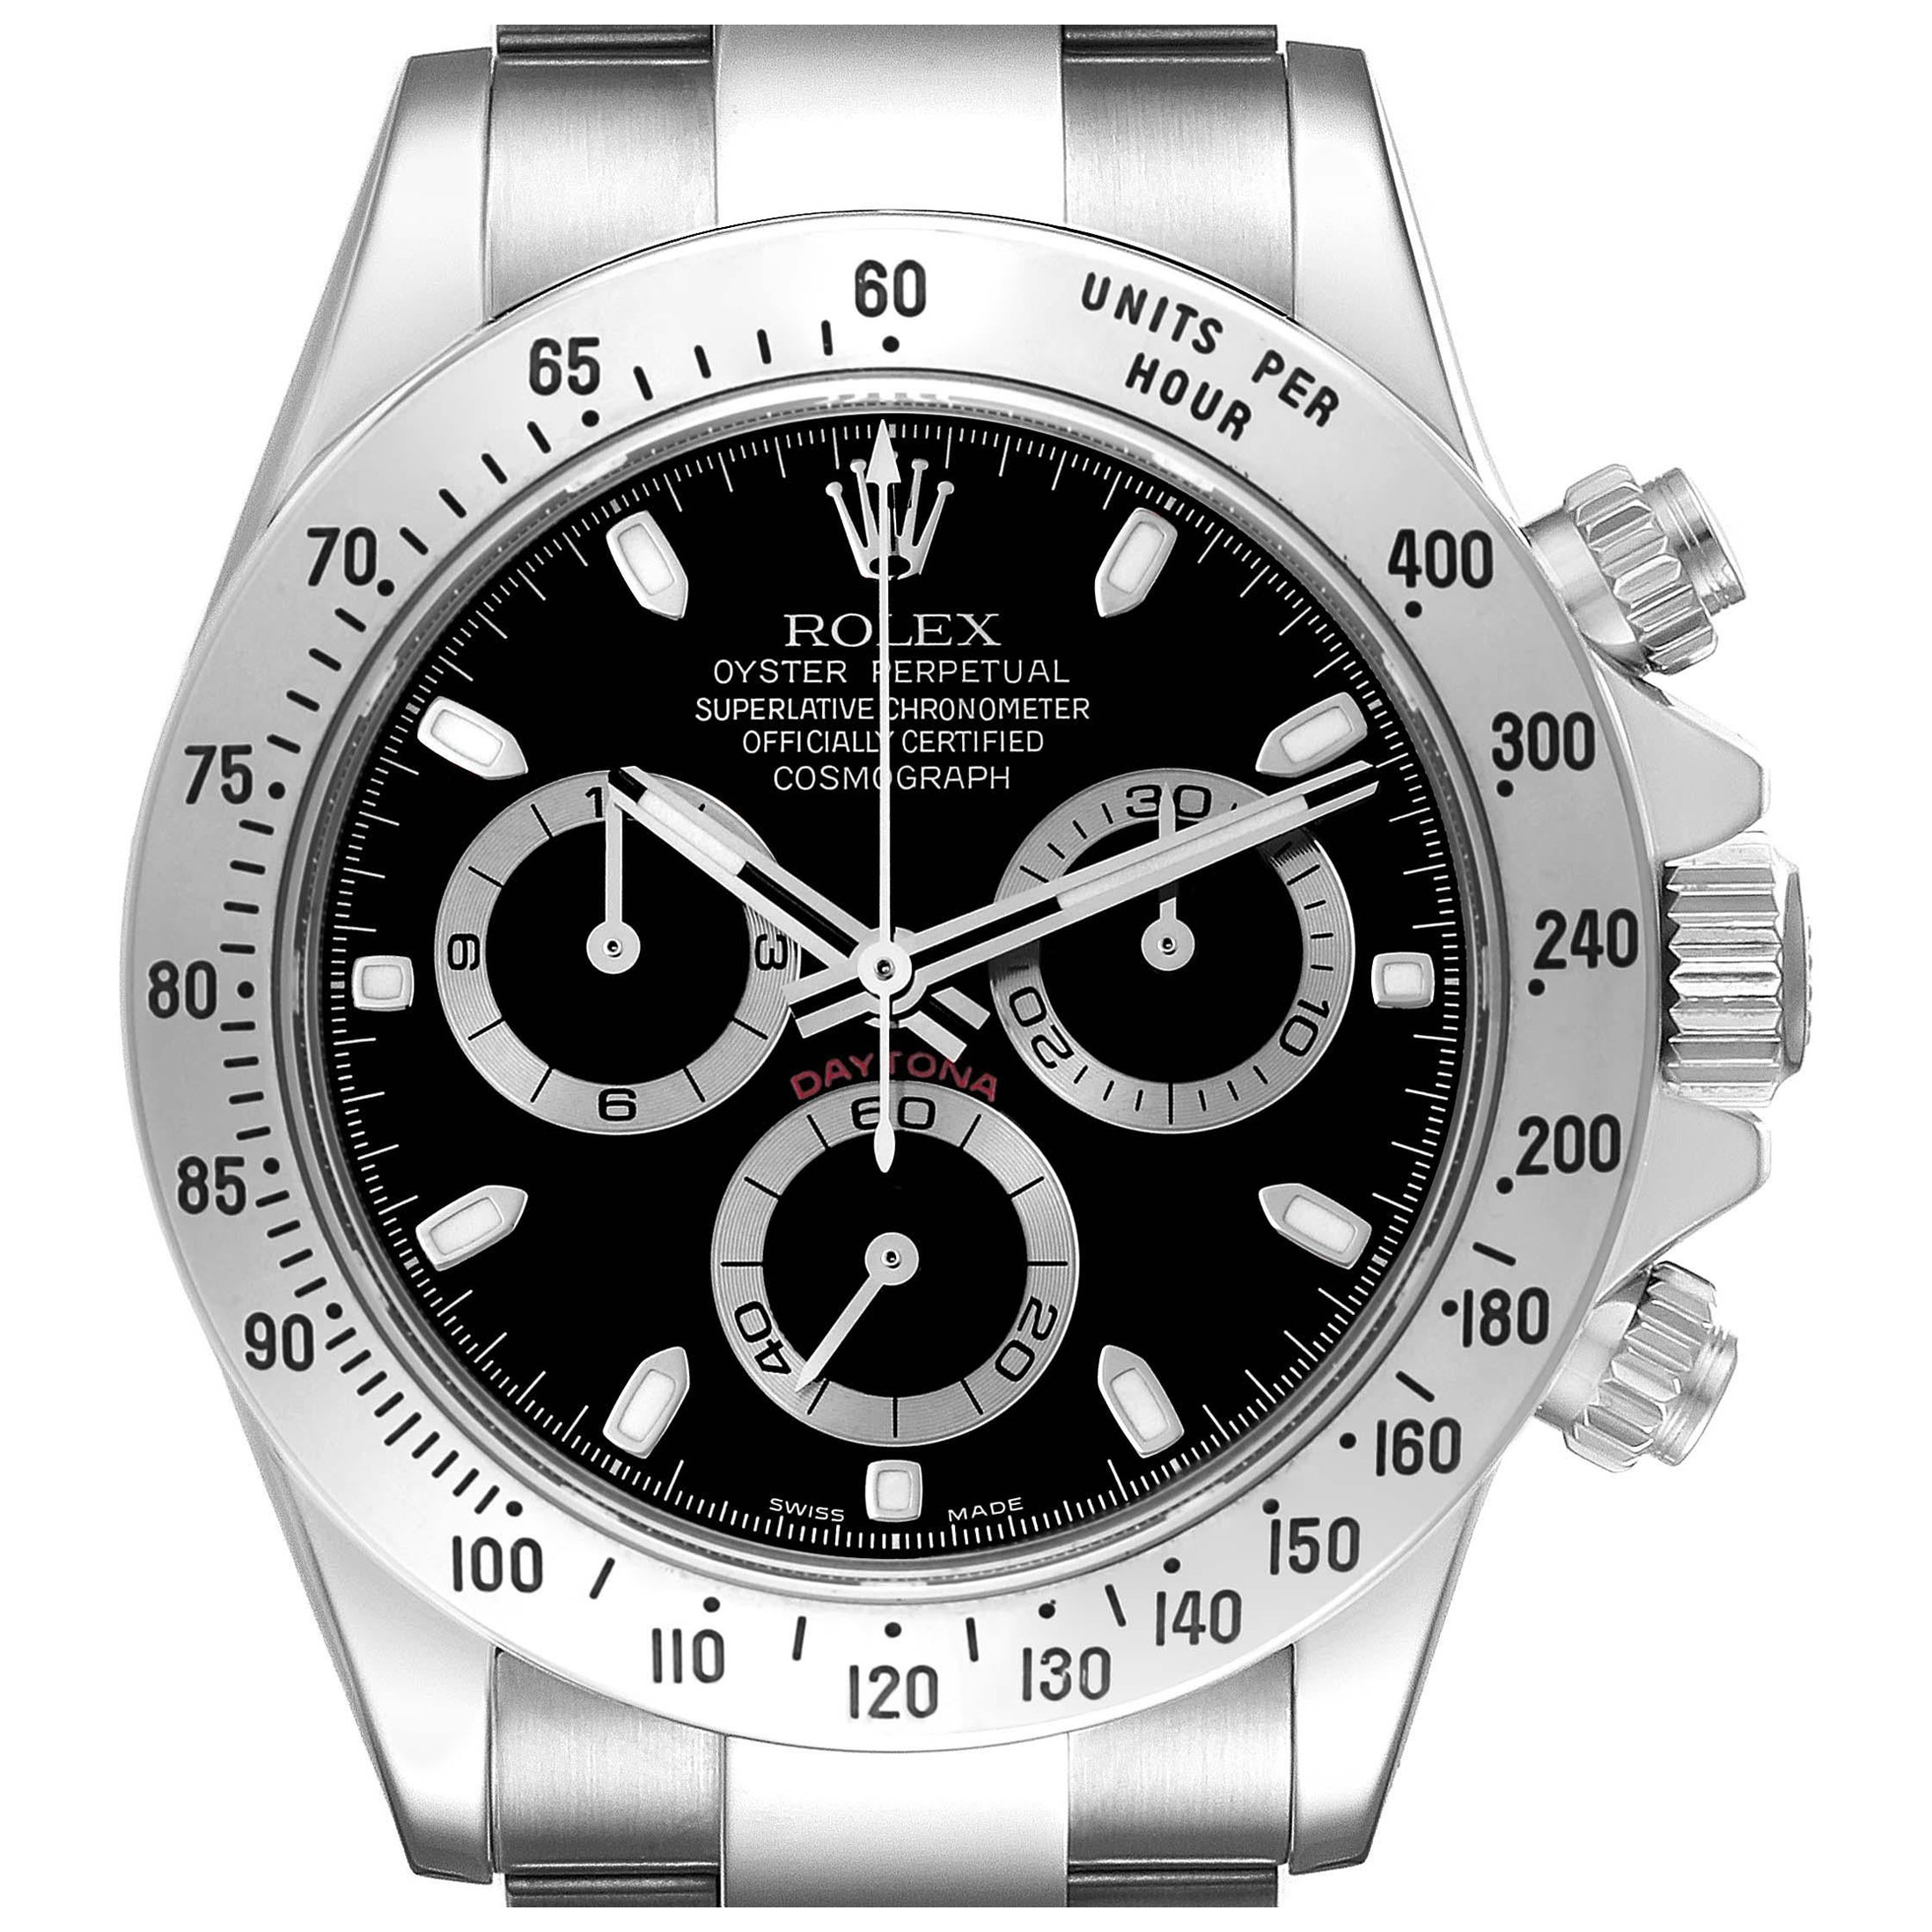 Rolex Daytona Chronograph Black Dial Steel Mens Watch 116520 Box Card